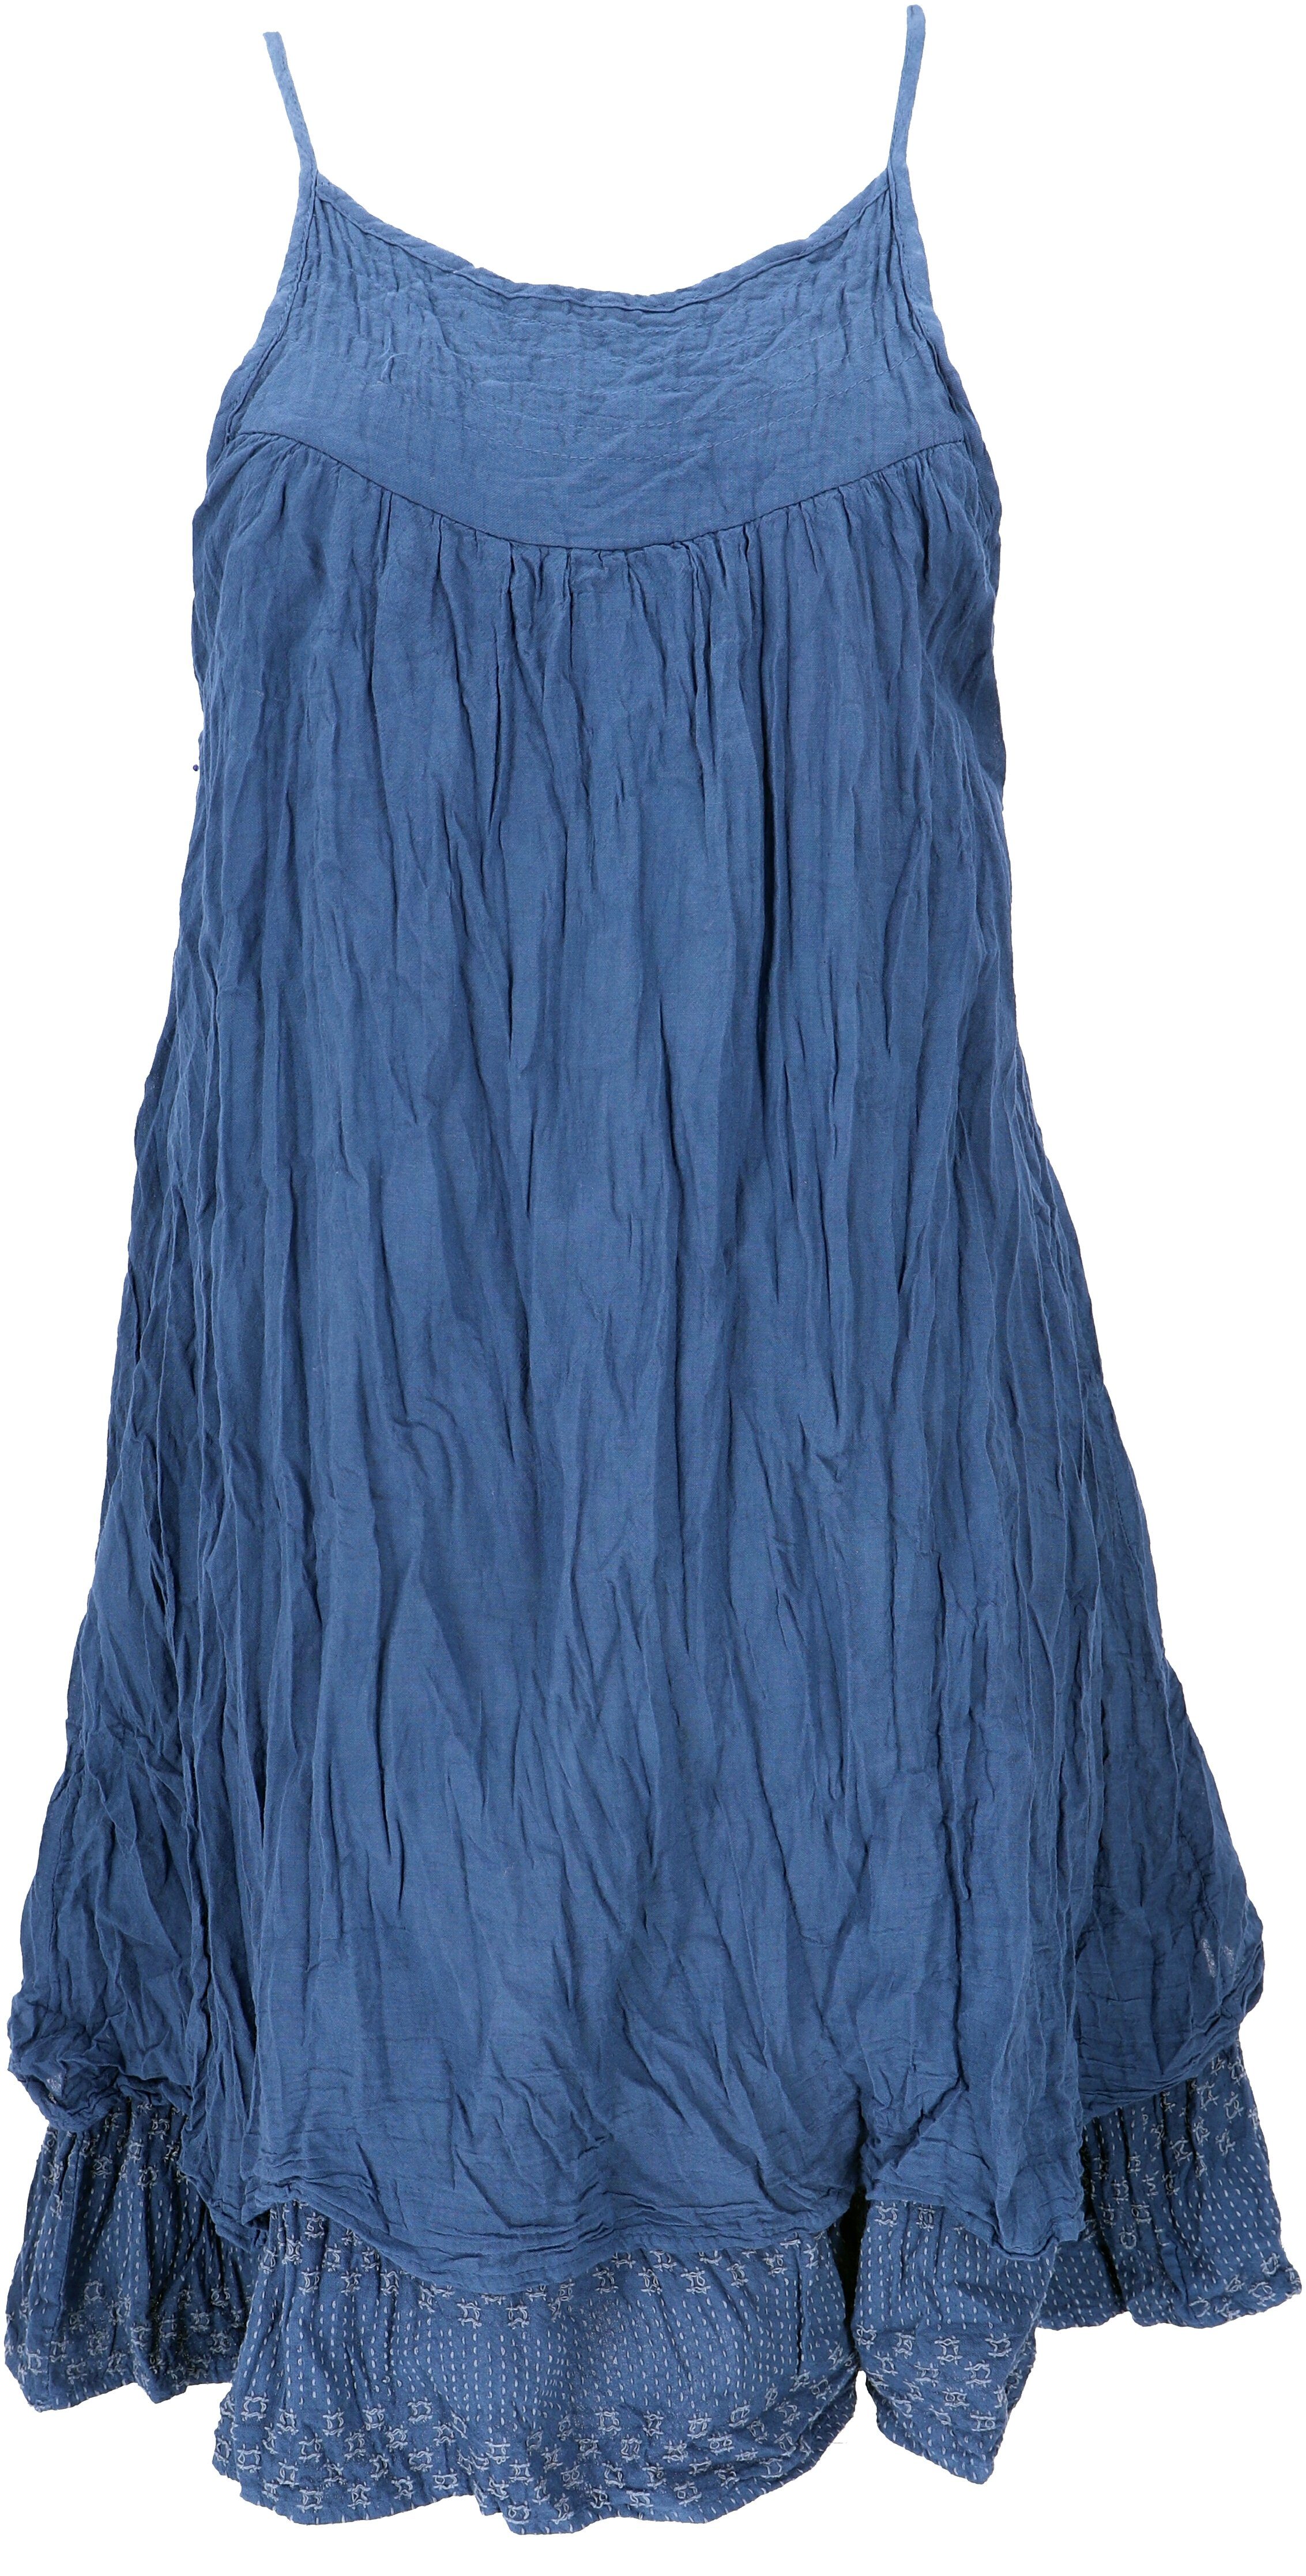 Guru-Shop Midikleid Boho Krinkelkleid, Minikleid, alternative Sommerkleid,.. Bekleidung blau